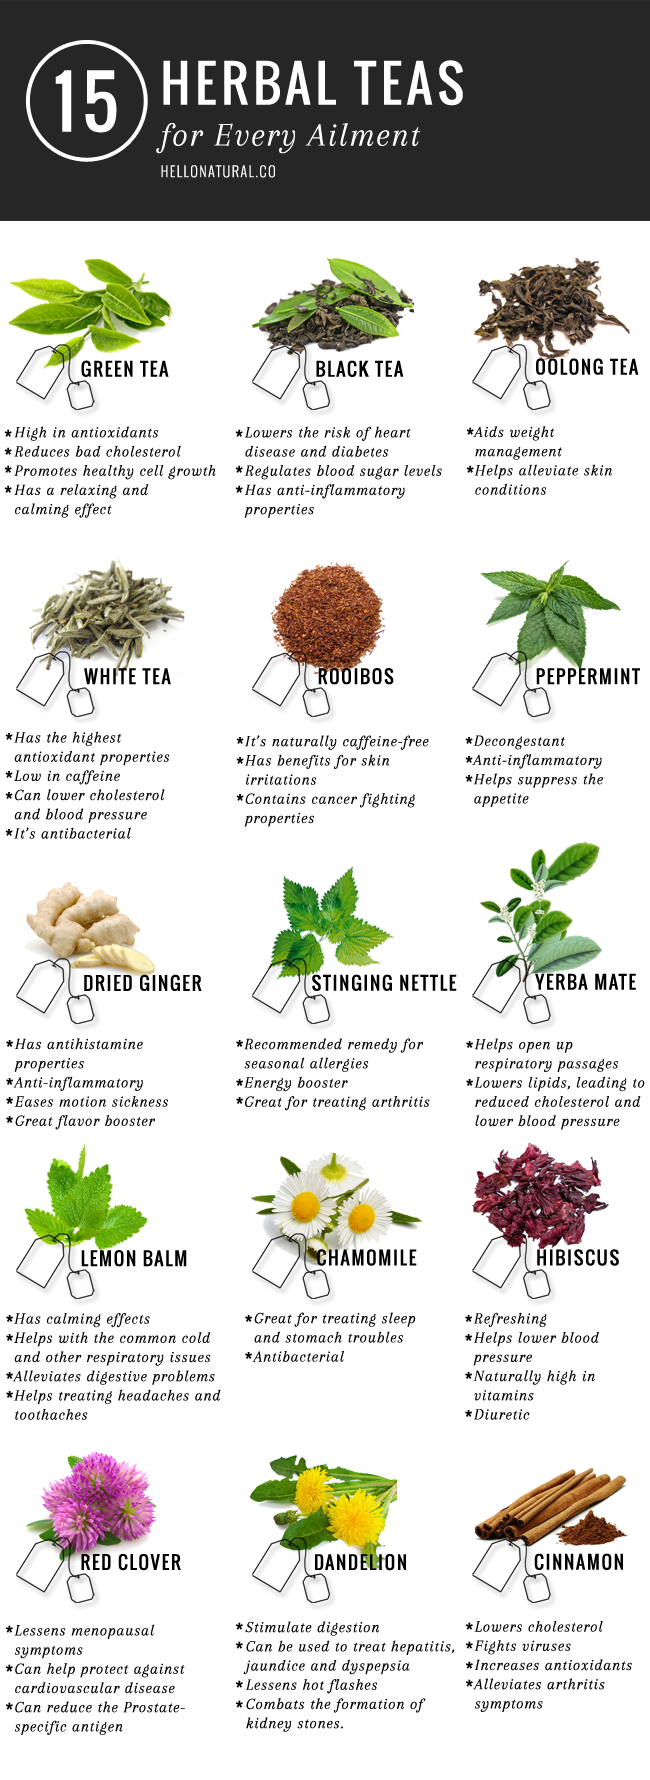 Health Benefits of Tea | HelloNatural.co